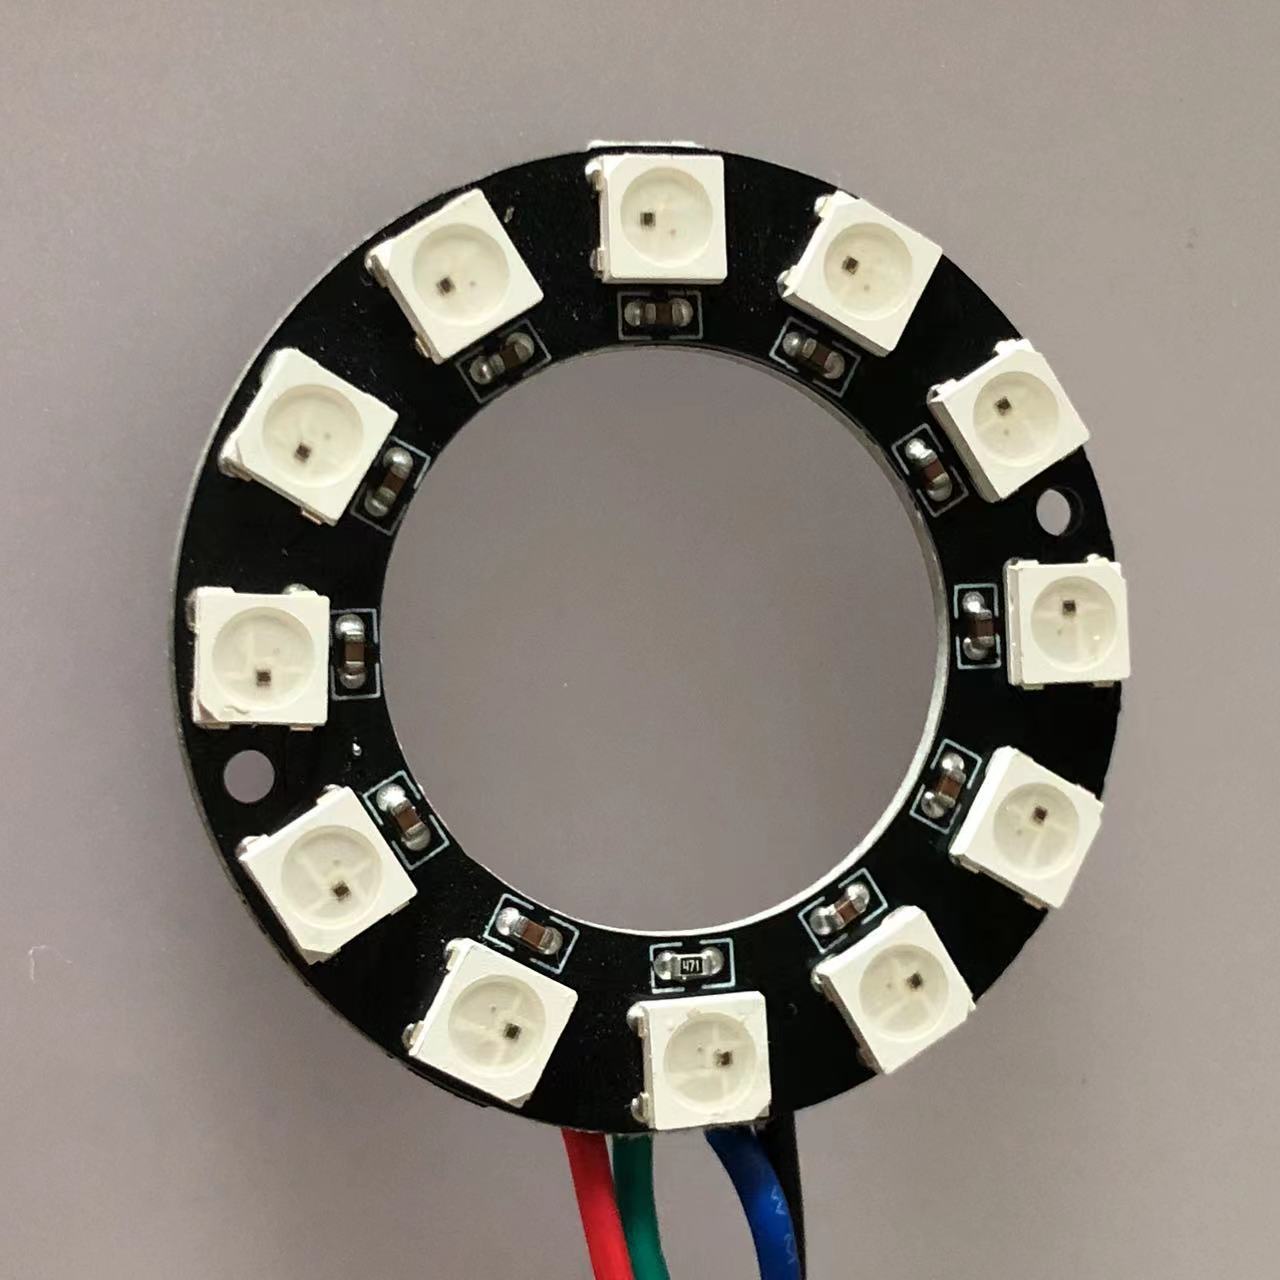 12v 12pixel rgb led ring (7).jpg